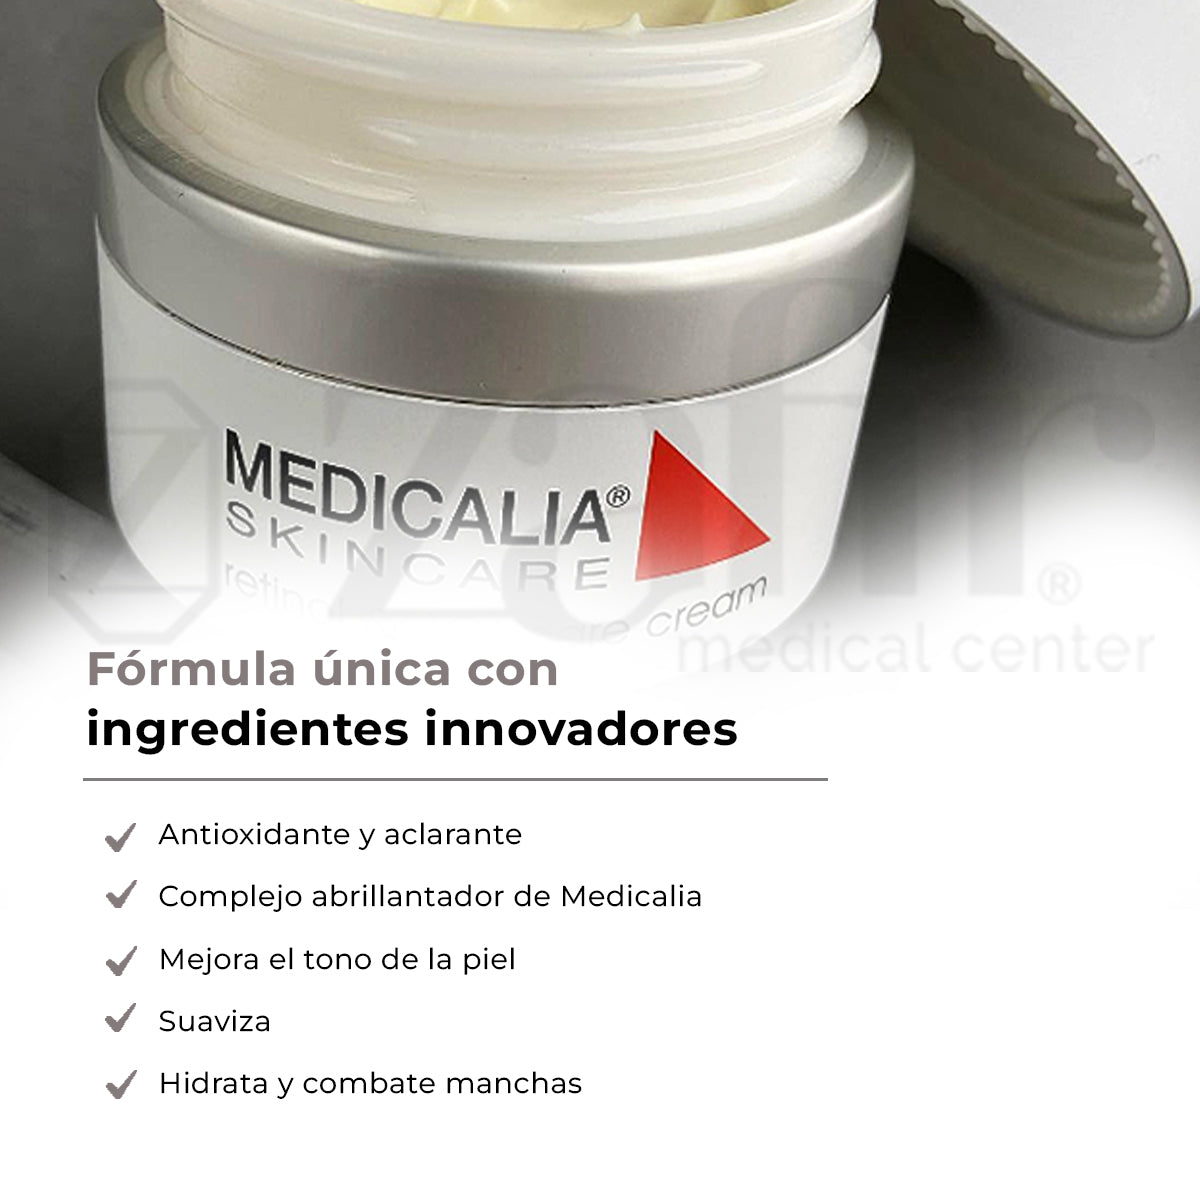 Medicalia. Lightening Cream, crema despigmentante que unifica el tono de piel. 50 ml - Zafir Medical Center